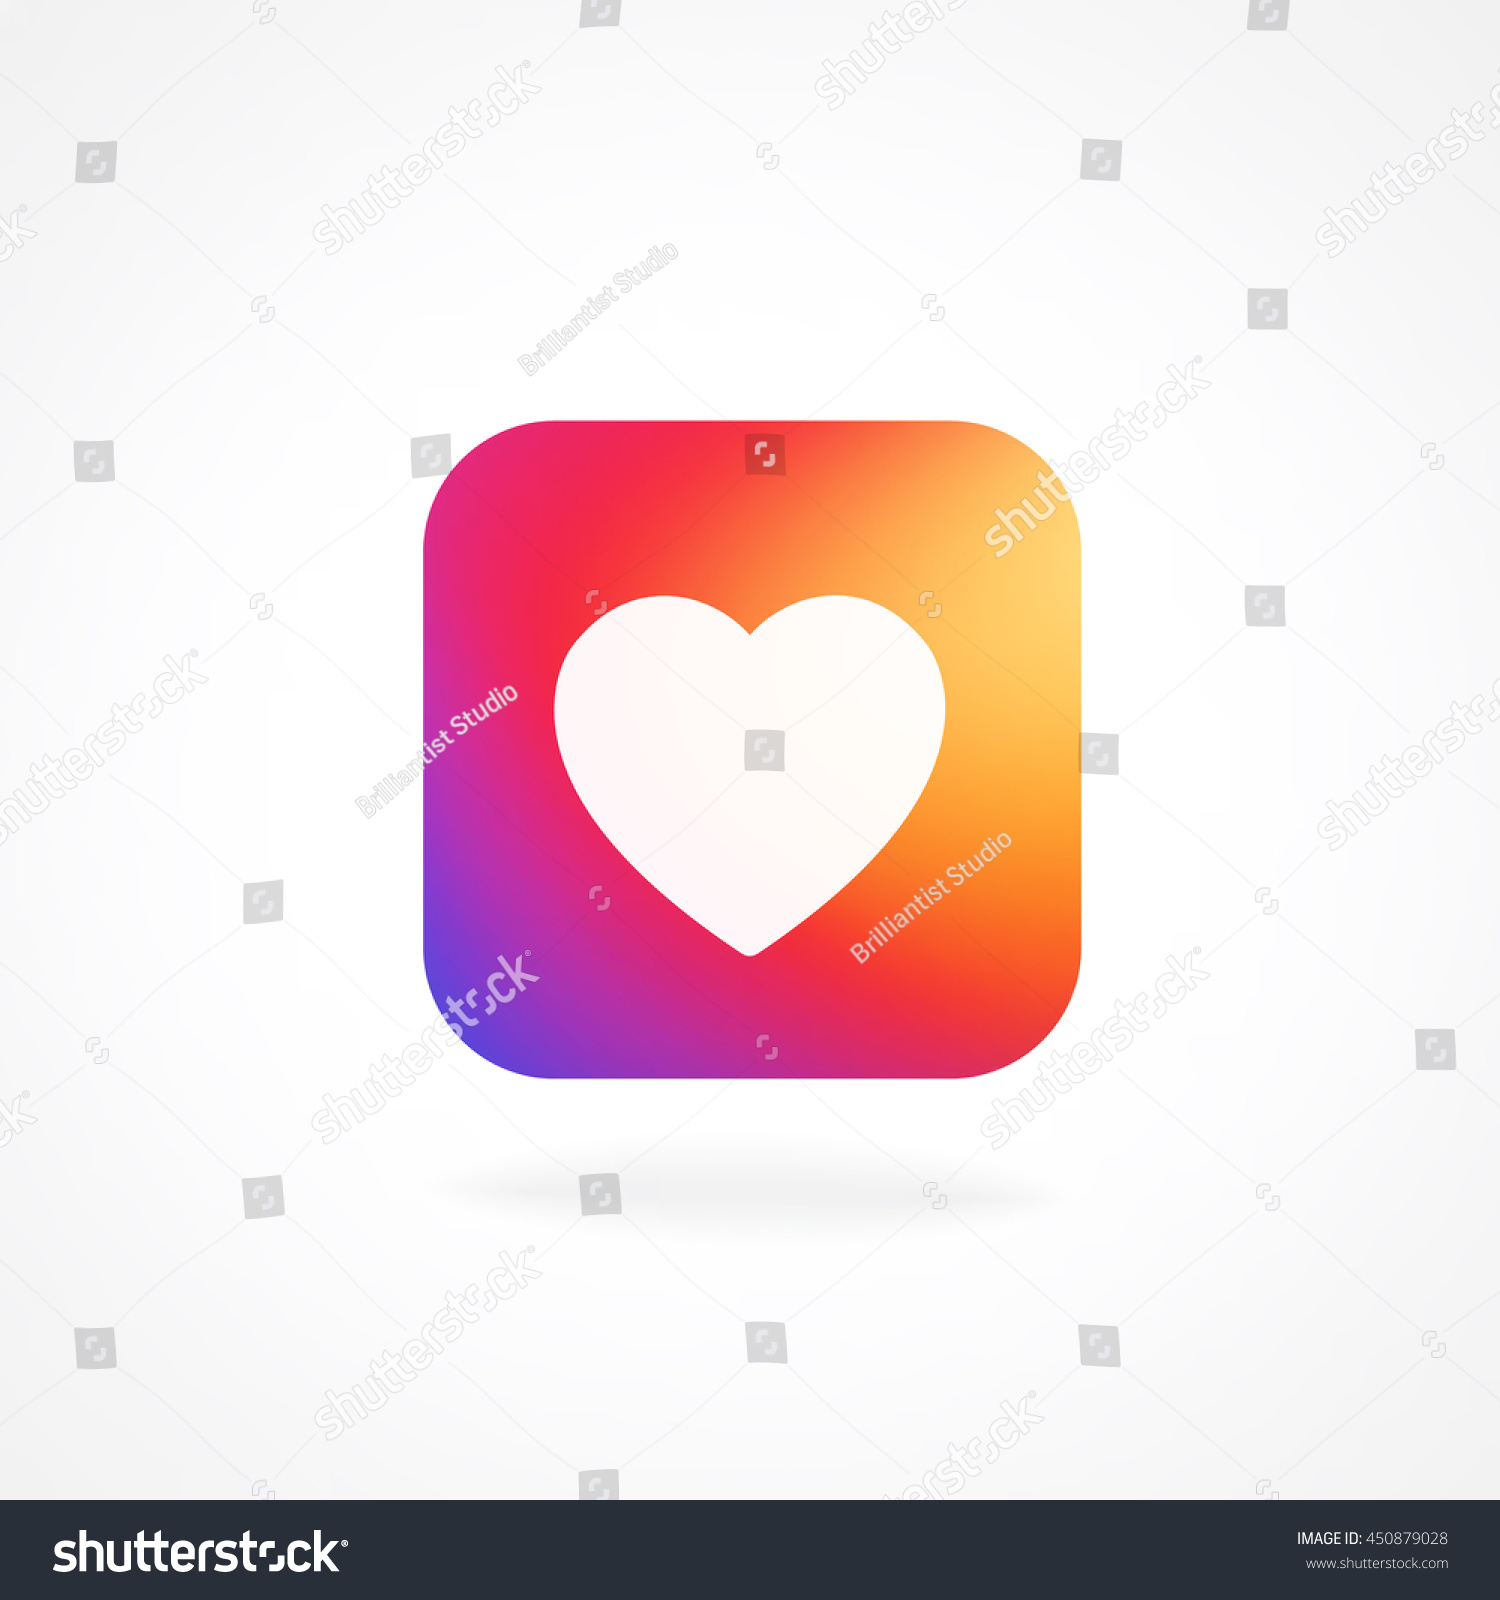 Heart Symbol App Icon Smooth Color Stock Vector 450879028 ... - 1500 x 1600 jpeg 228kB